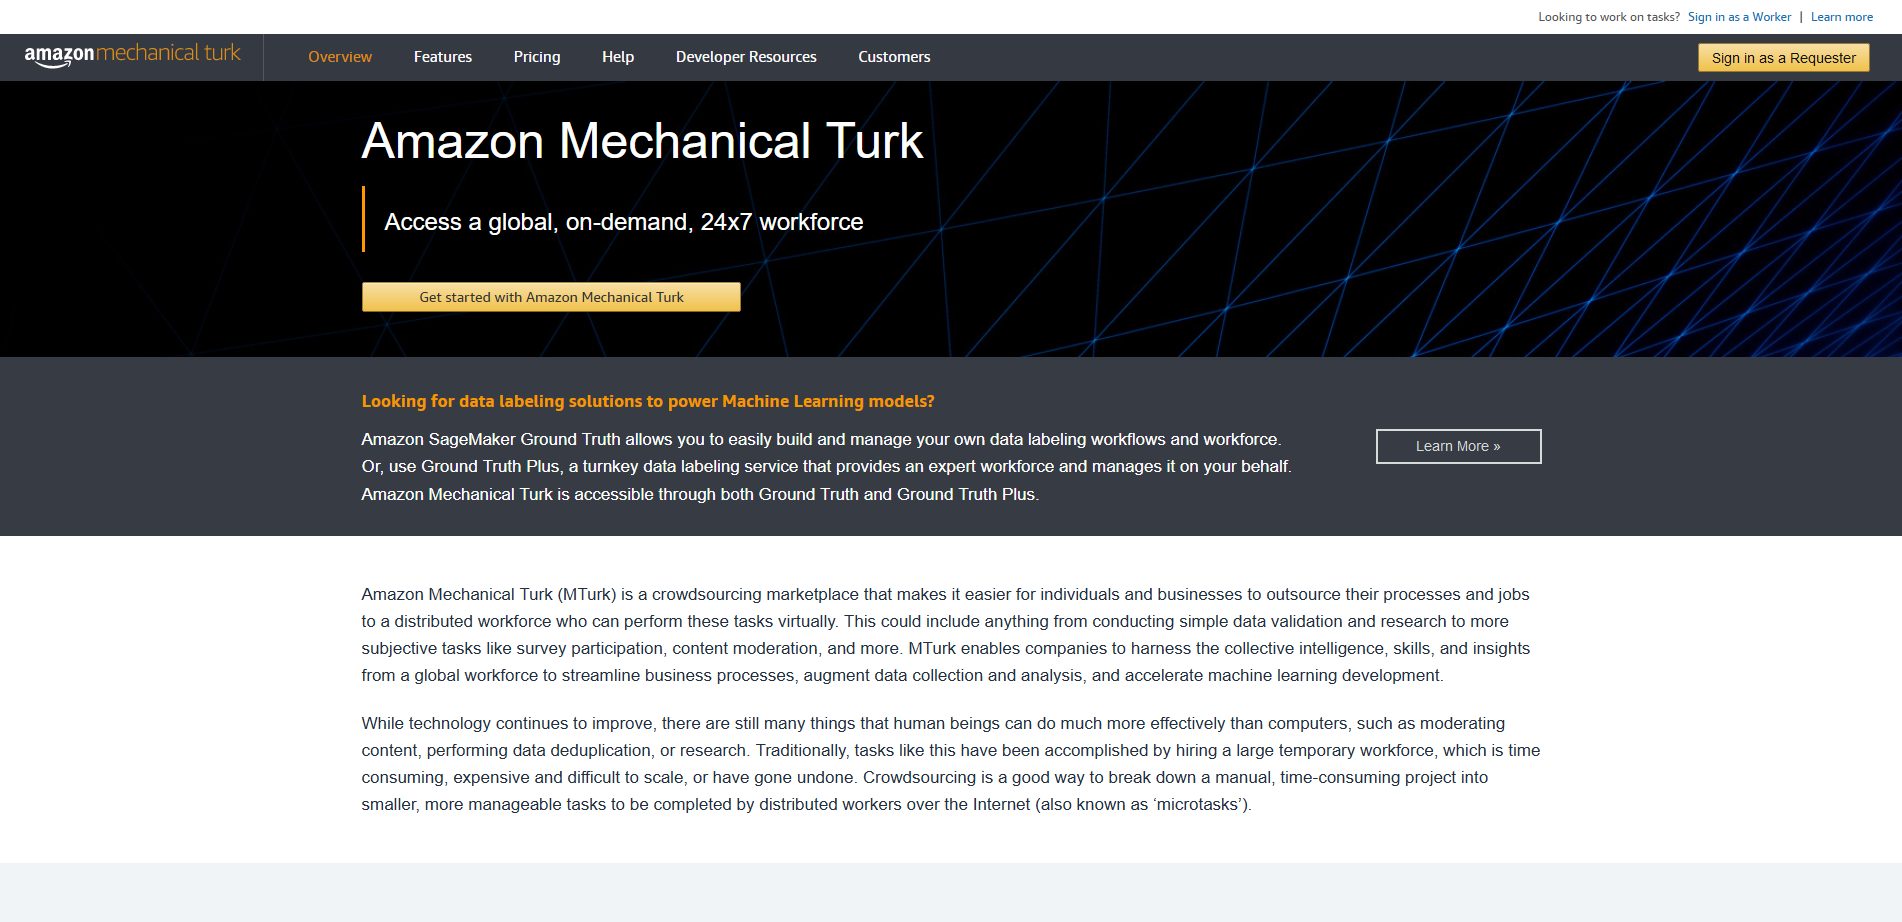 Amazon Mechanical Turk Review